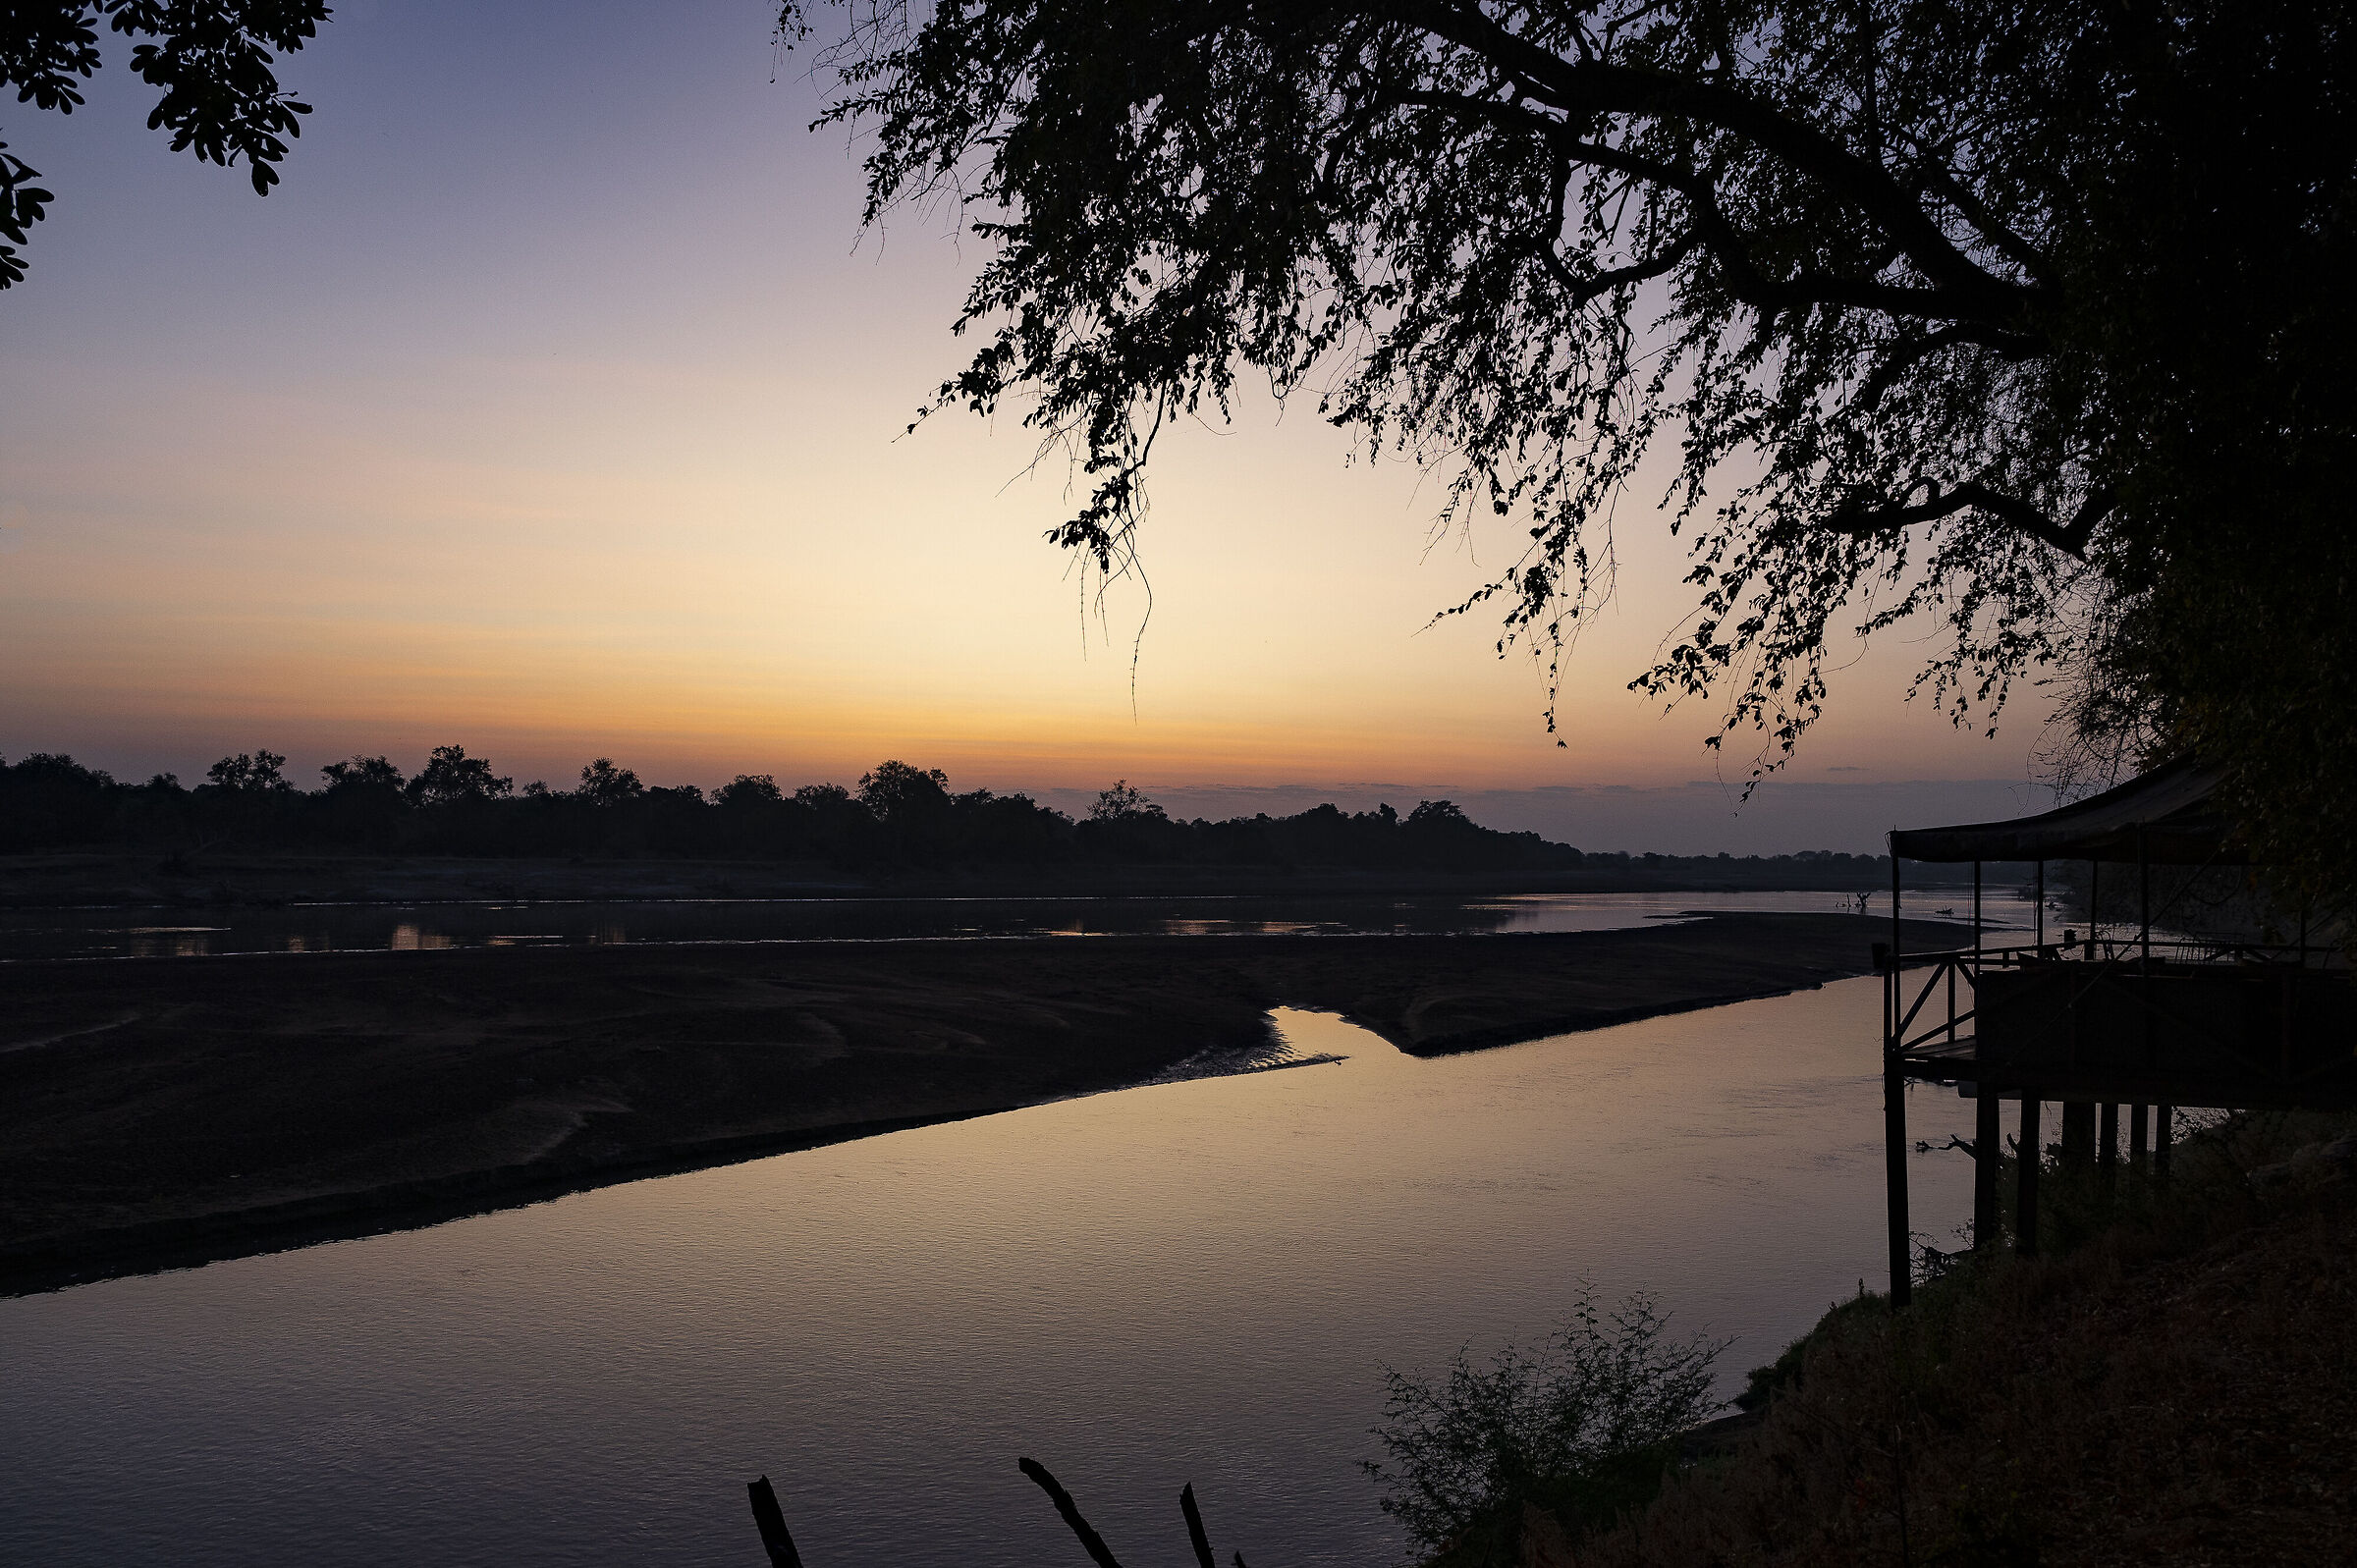 Sunset over Luangwa river...